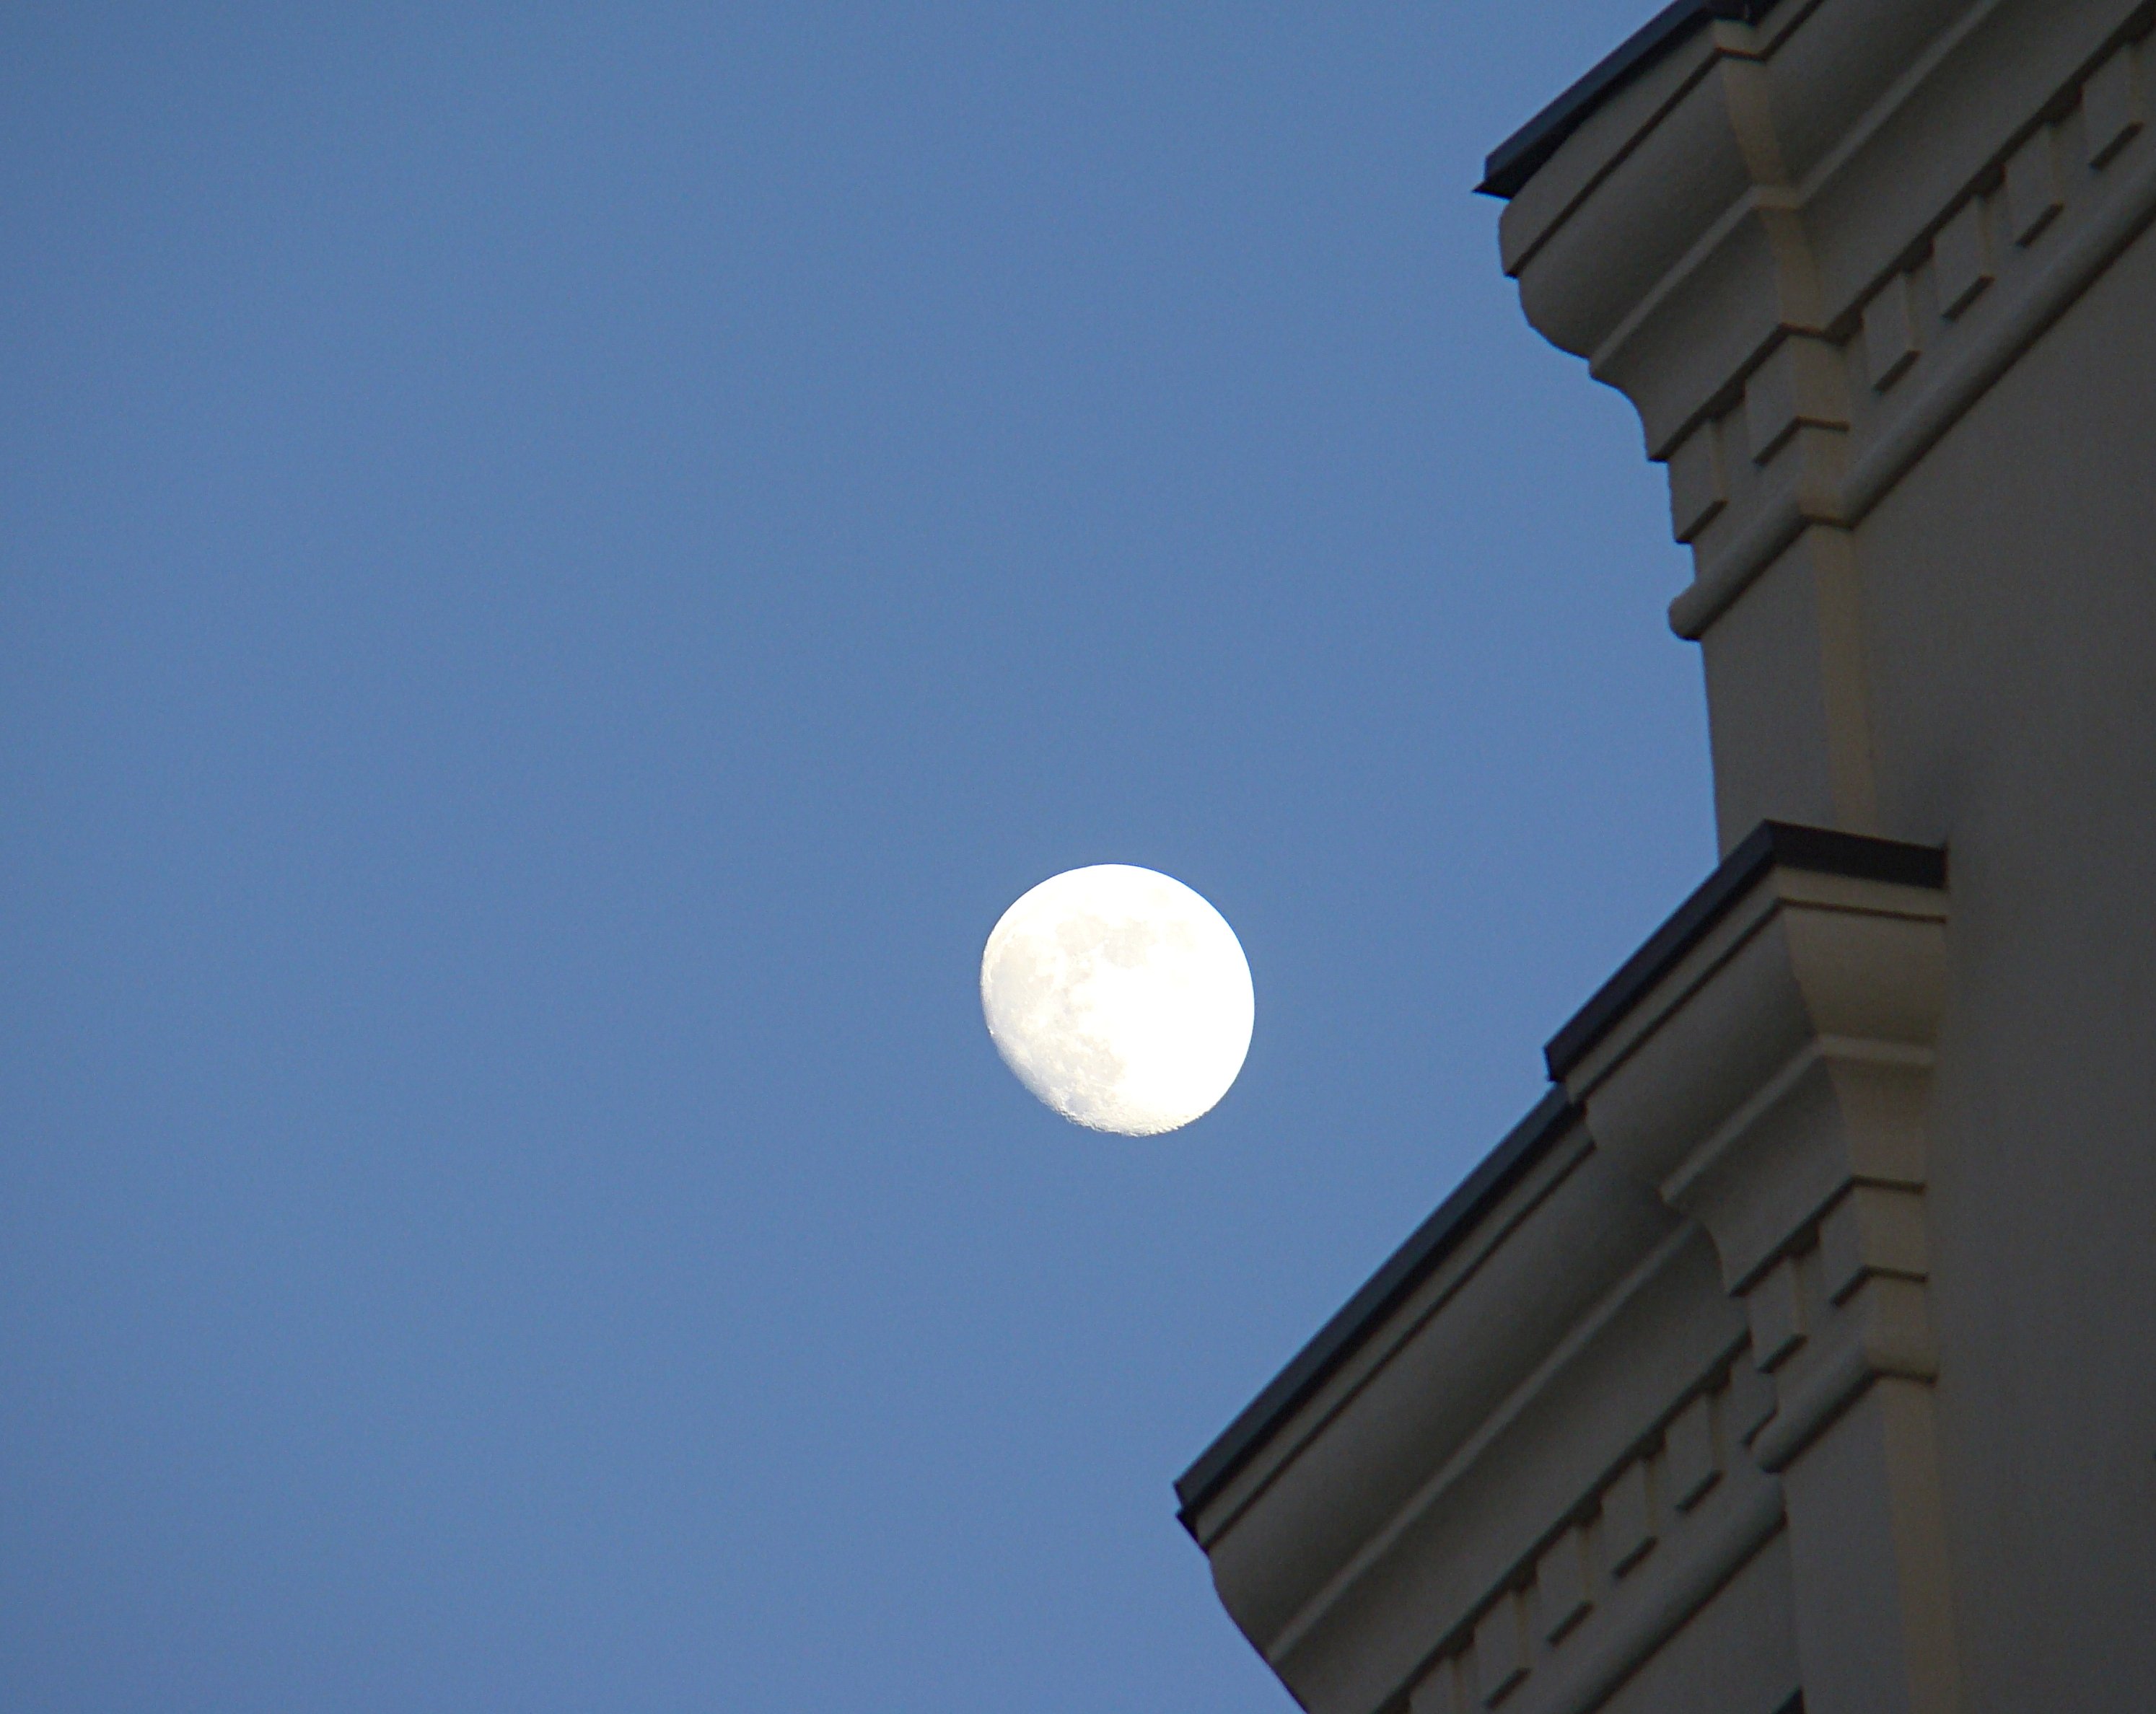 Moon roof. Луна крыша лифт. Полумесяц на крыше дома.